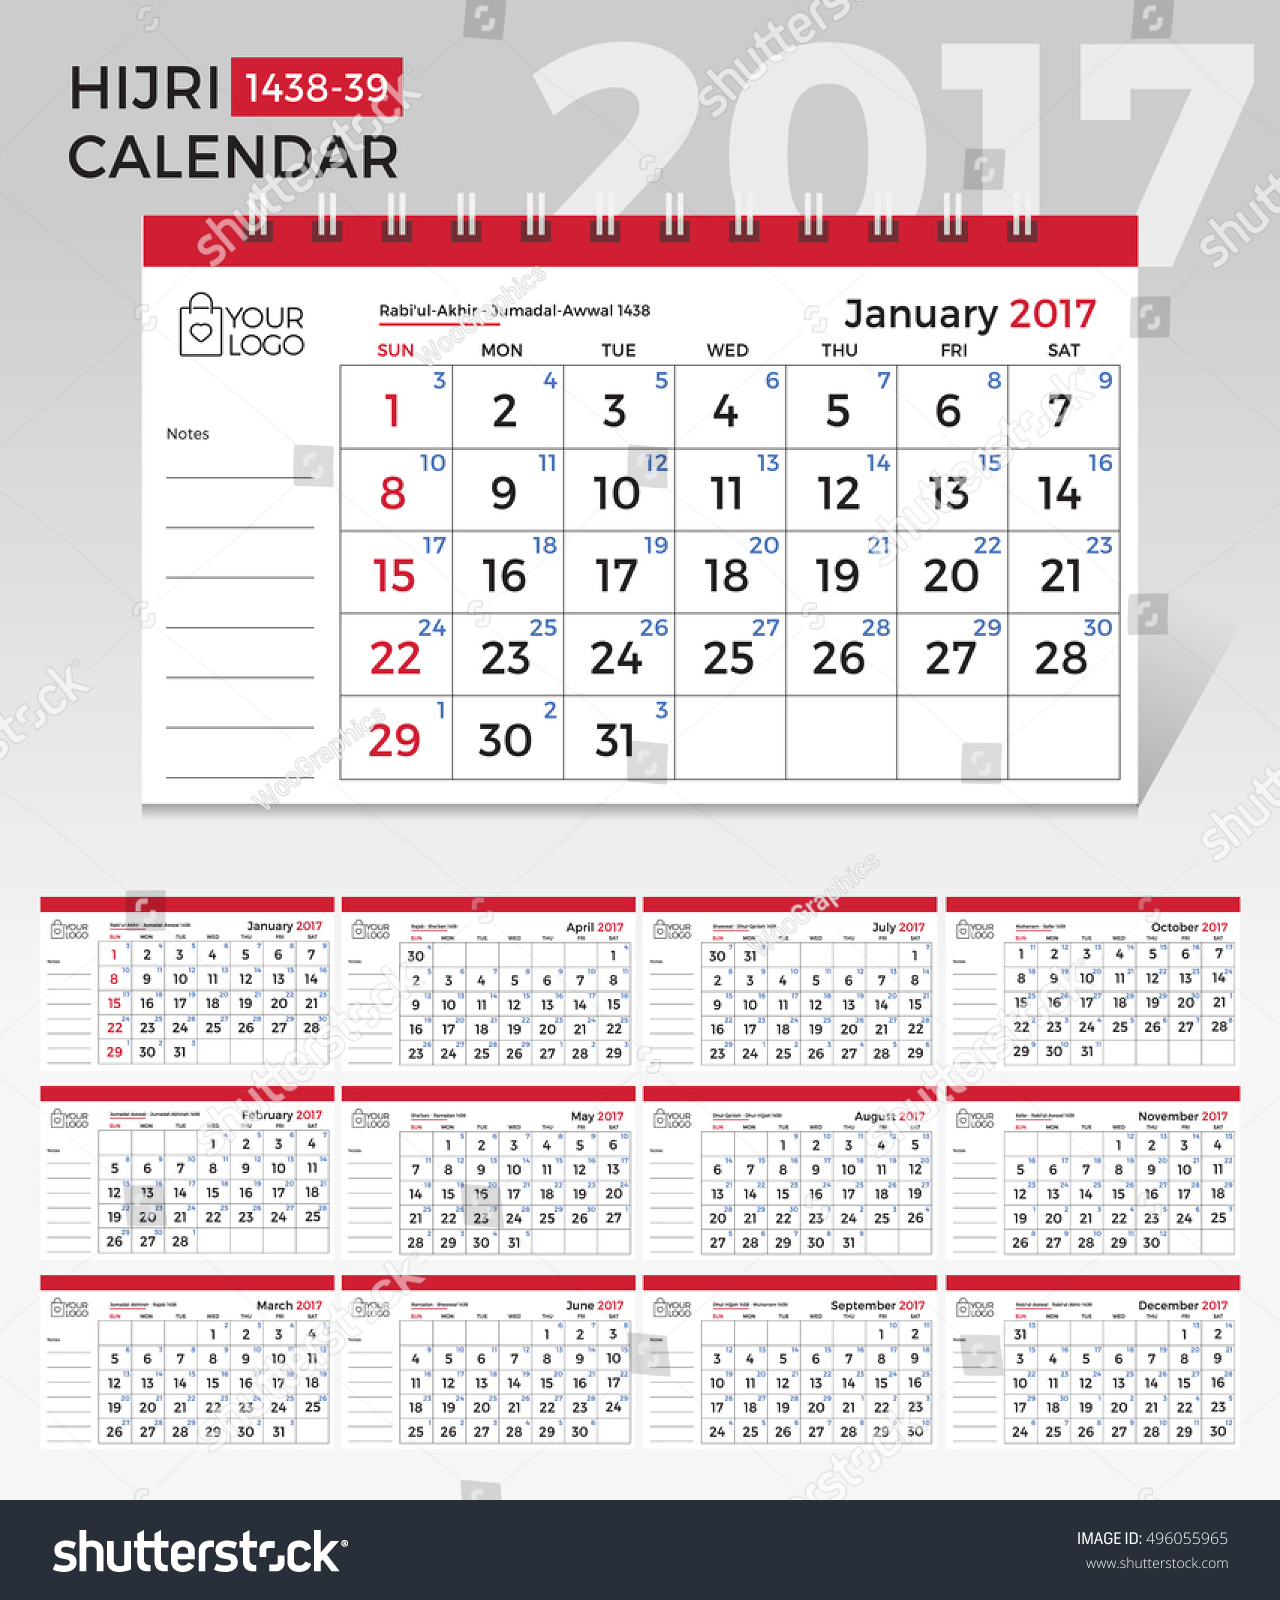 hijri-islamic-calendar-2017-simple-minimal-elegant-desk-calendar